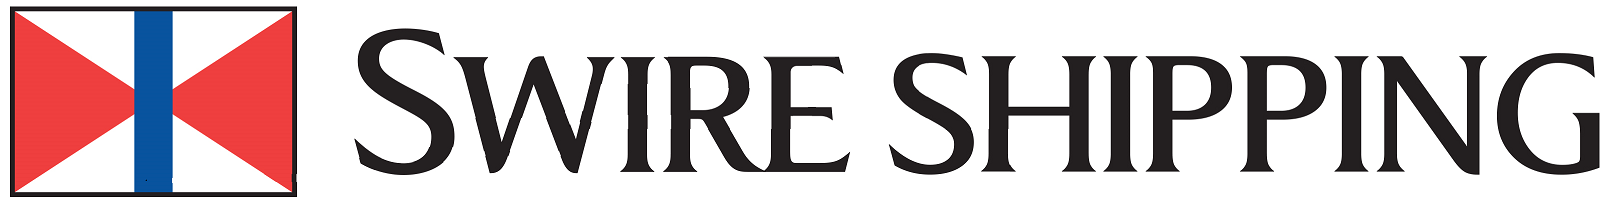 Swire Shipping Pte. Ltd. company logo